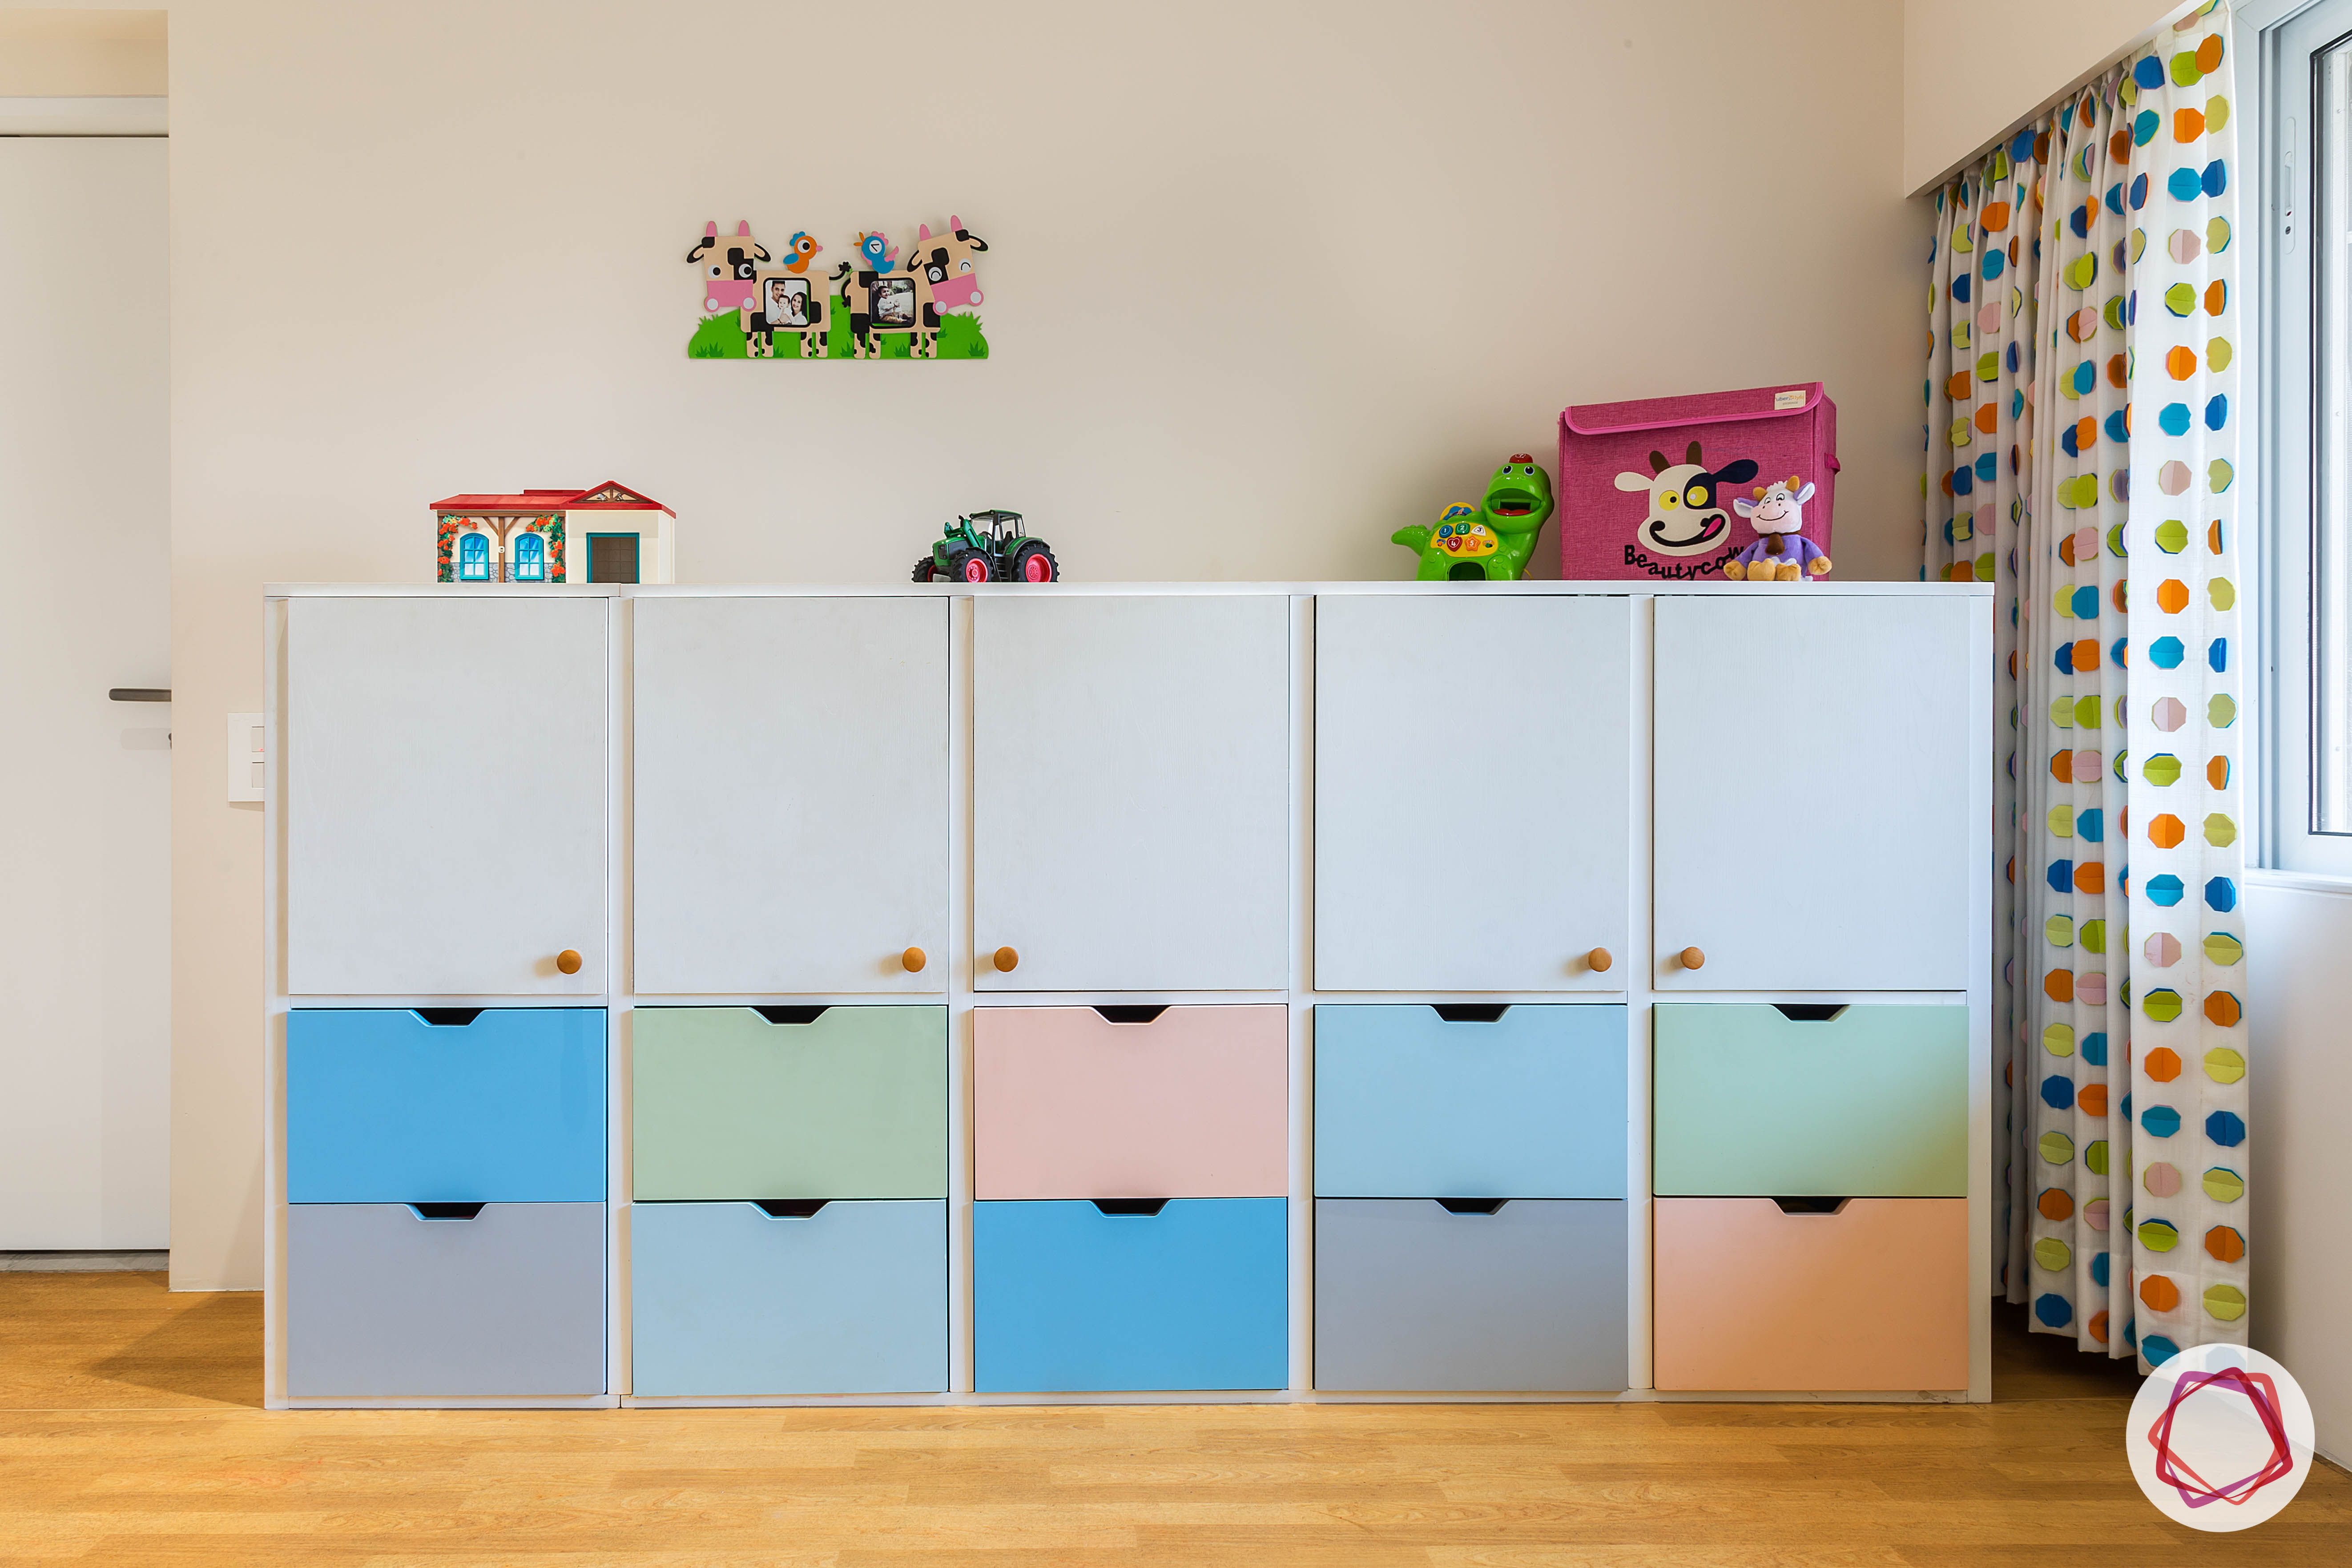 kids-room-toy-storage-cabinet-blue-pink-green-drawers
